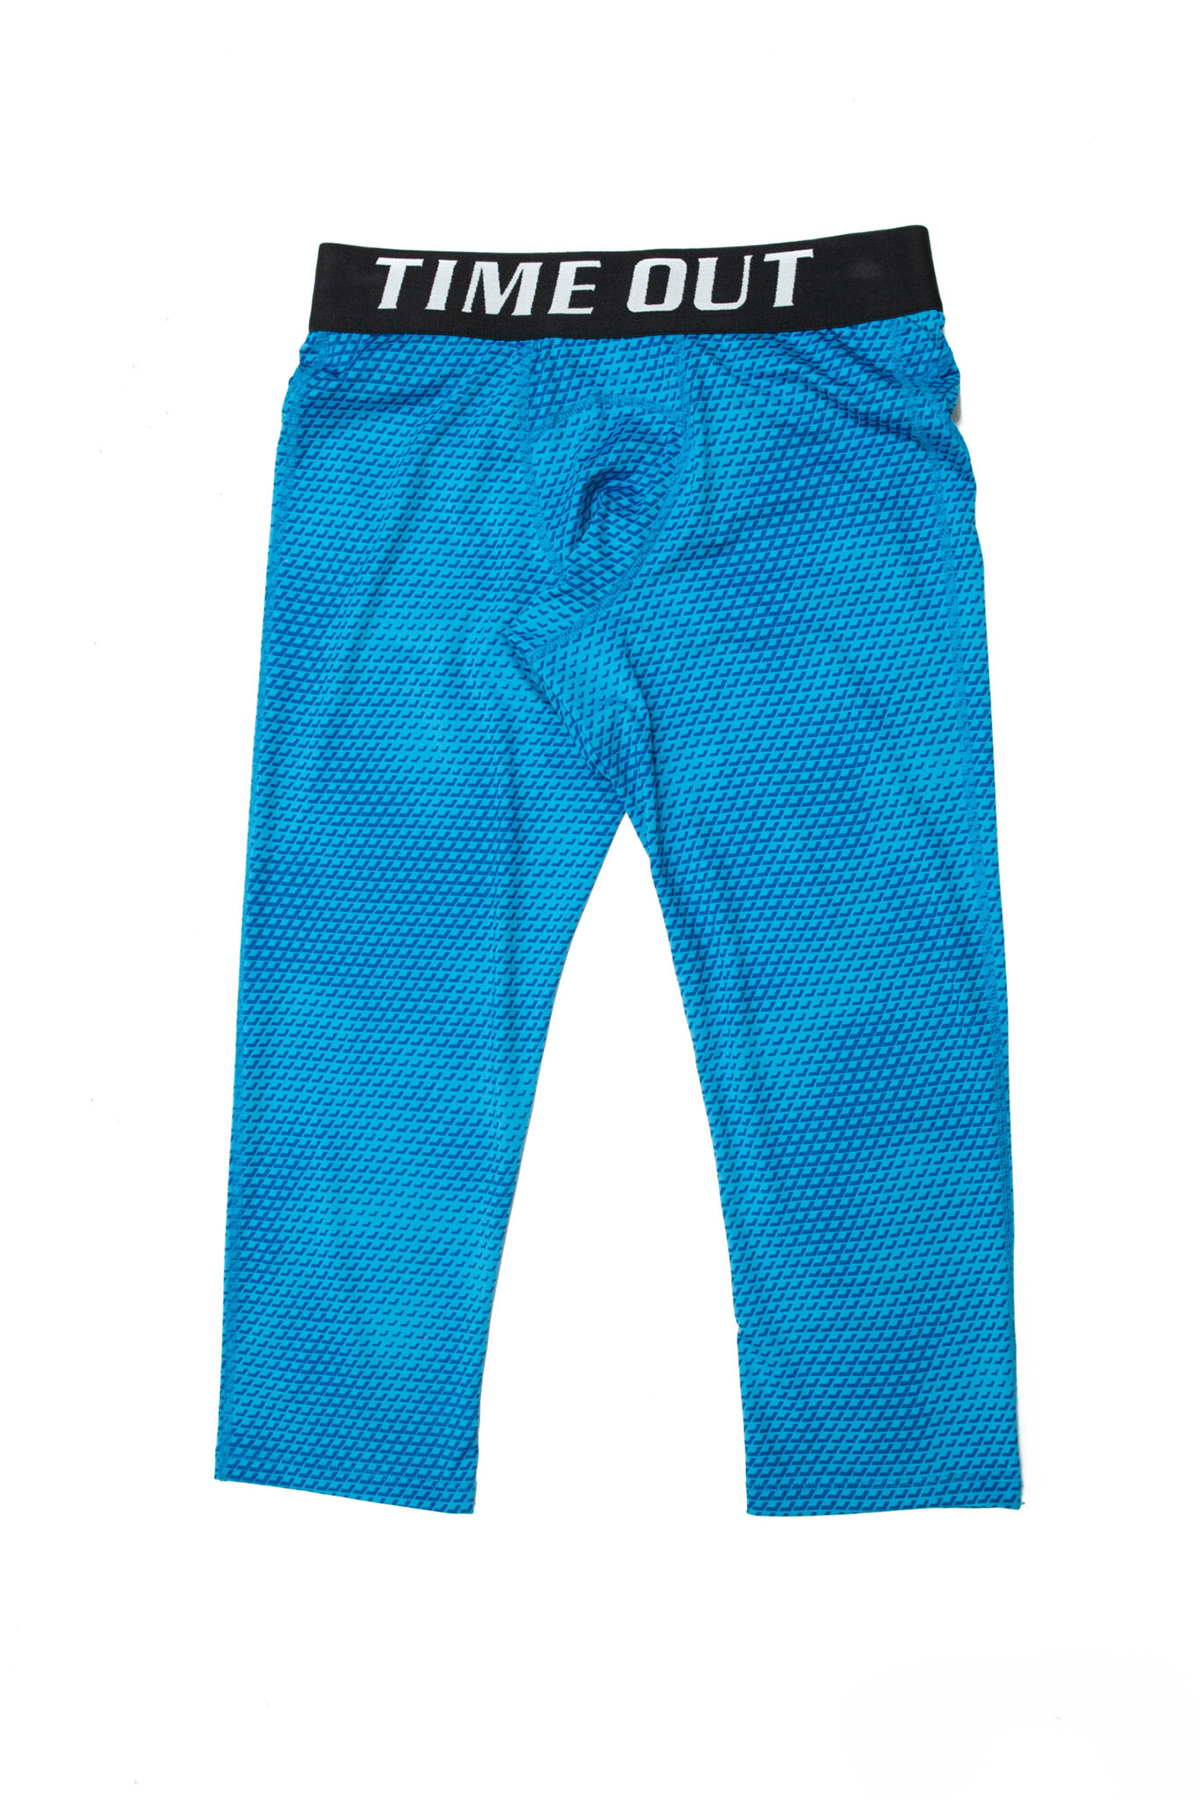 Time-Out-X-Men’s-Long-Gym-Shorts—Ocean-Blue—Back